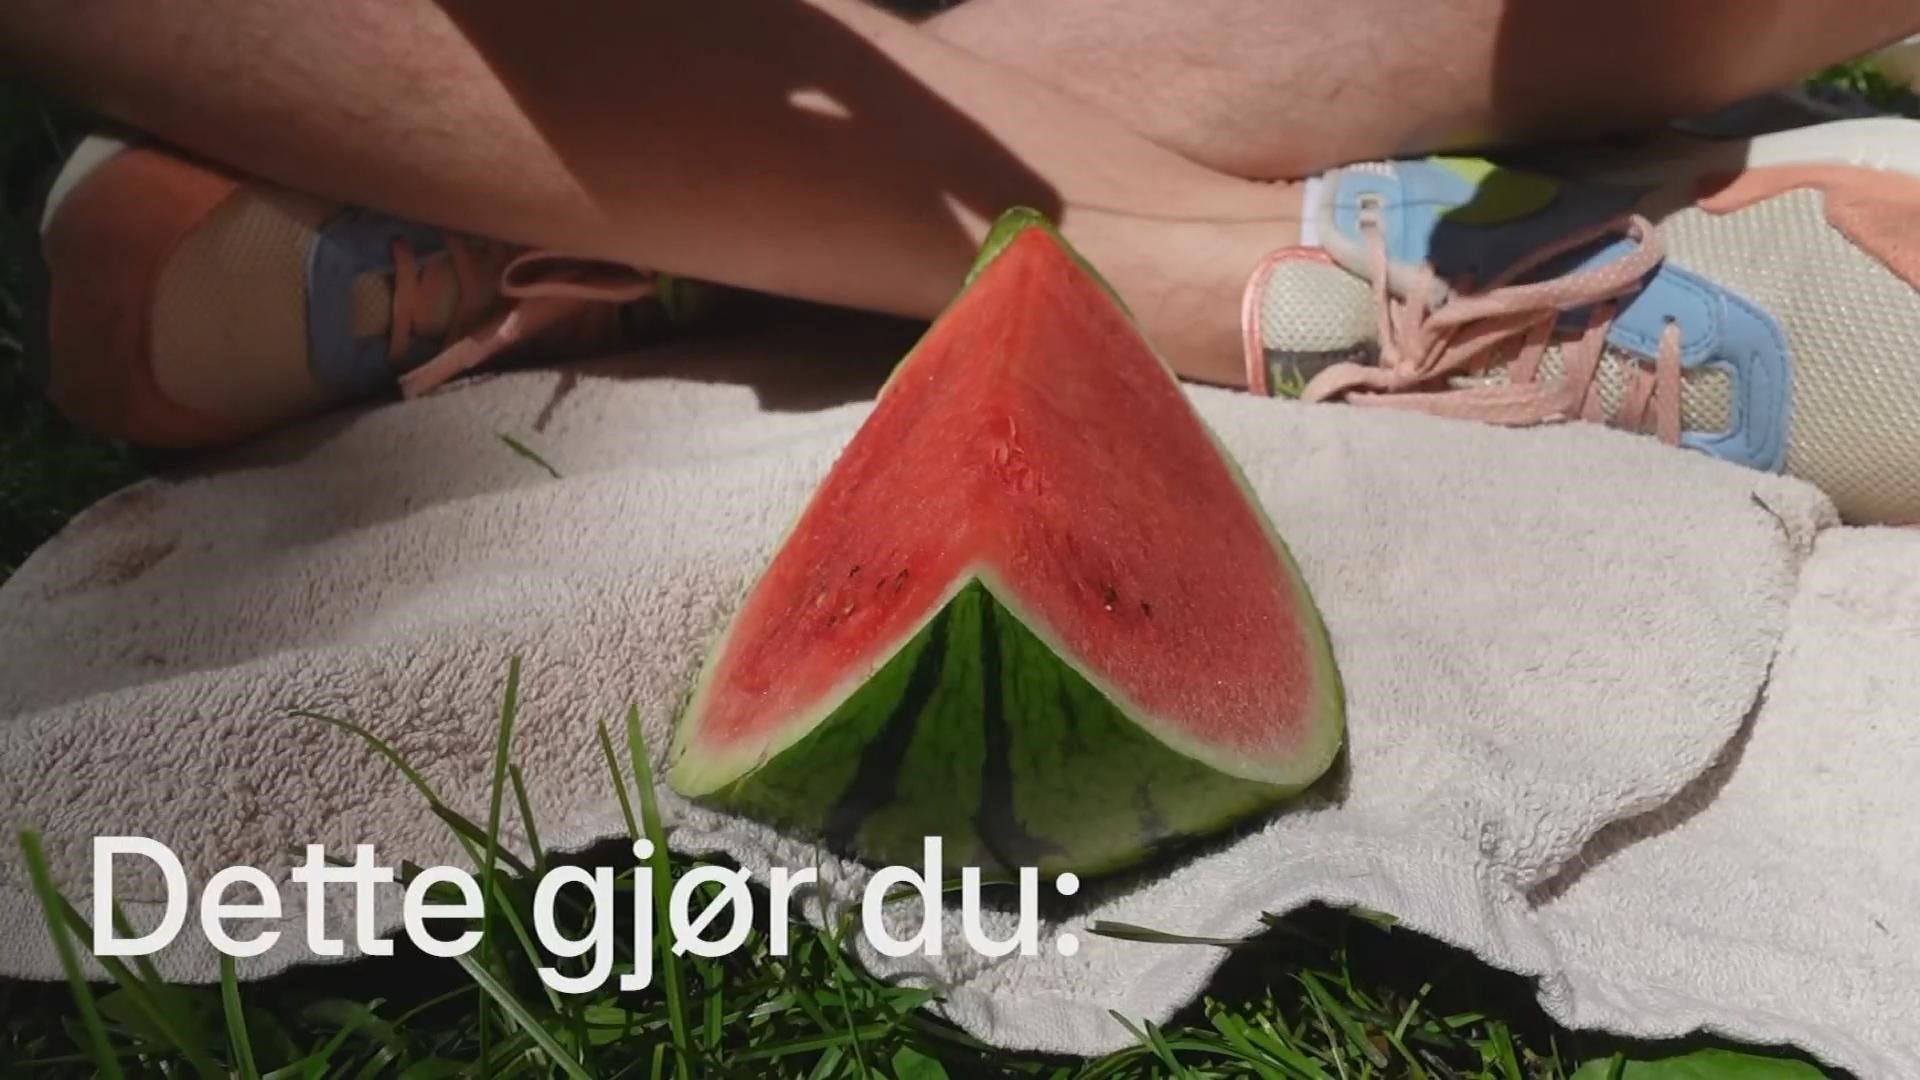 Har du prøvd dette vannmelon-trikset? 